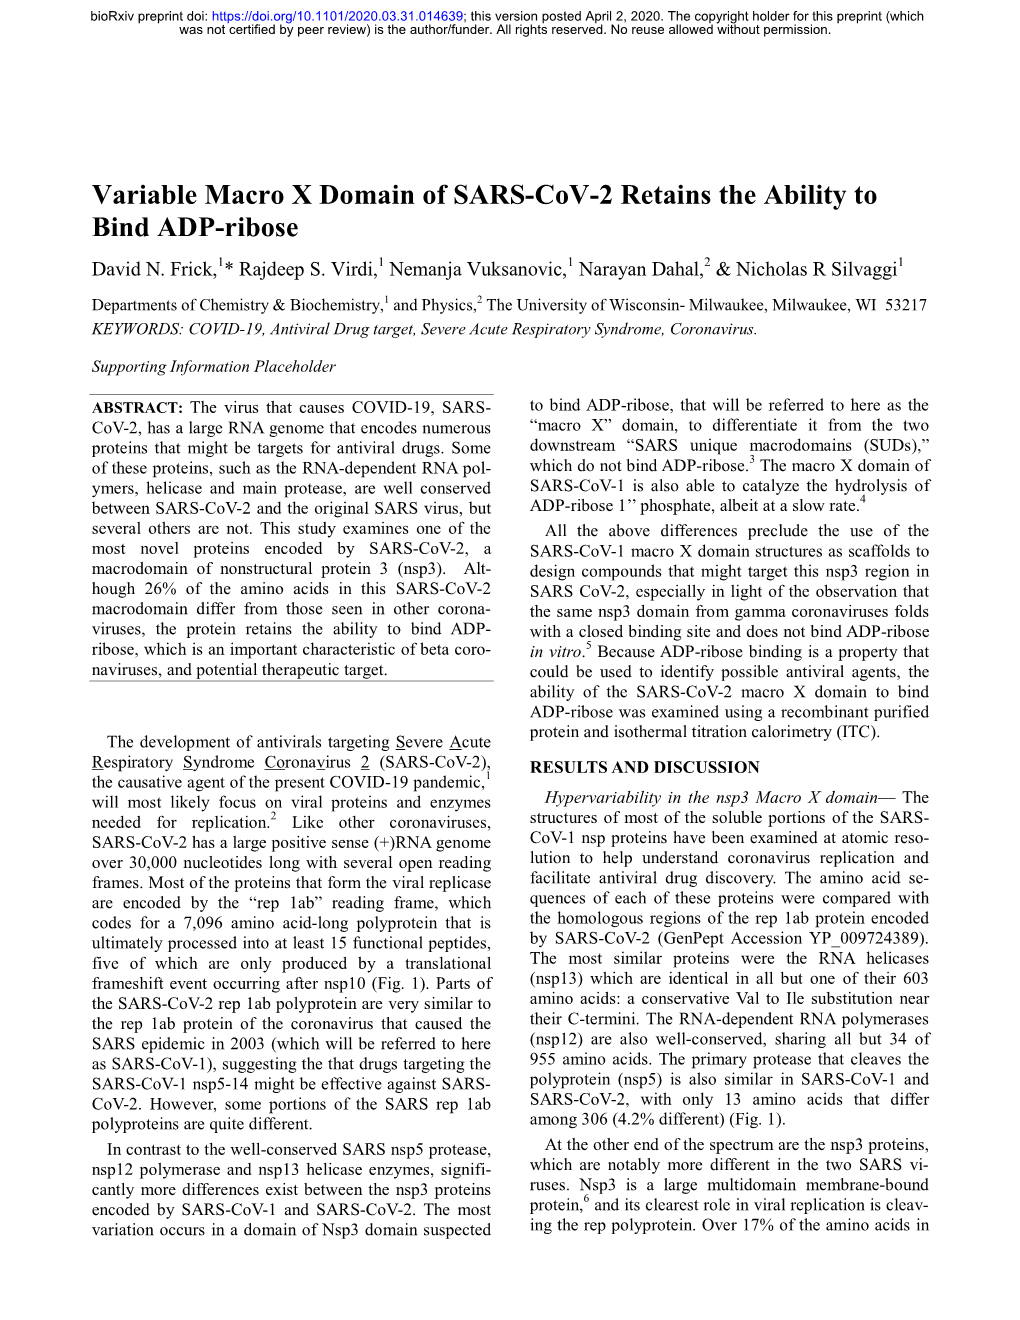 Variable Macro X Domain of SARS-Cov-2 Retains the Ability to Bind ADP-Ribose David N